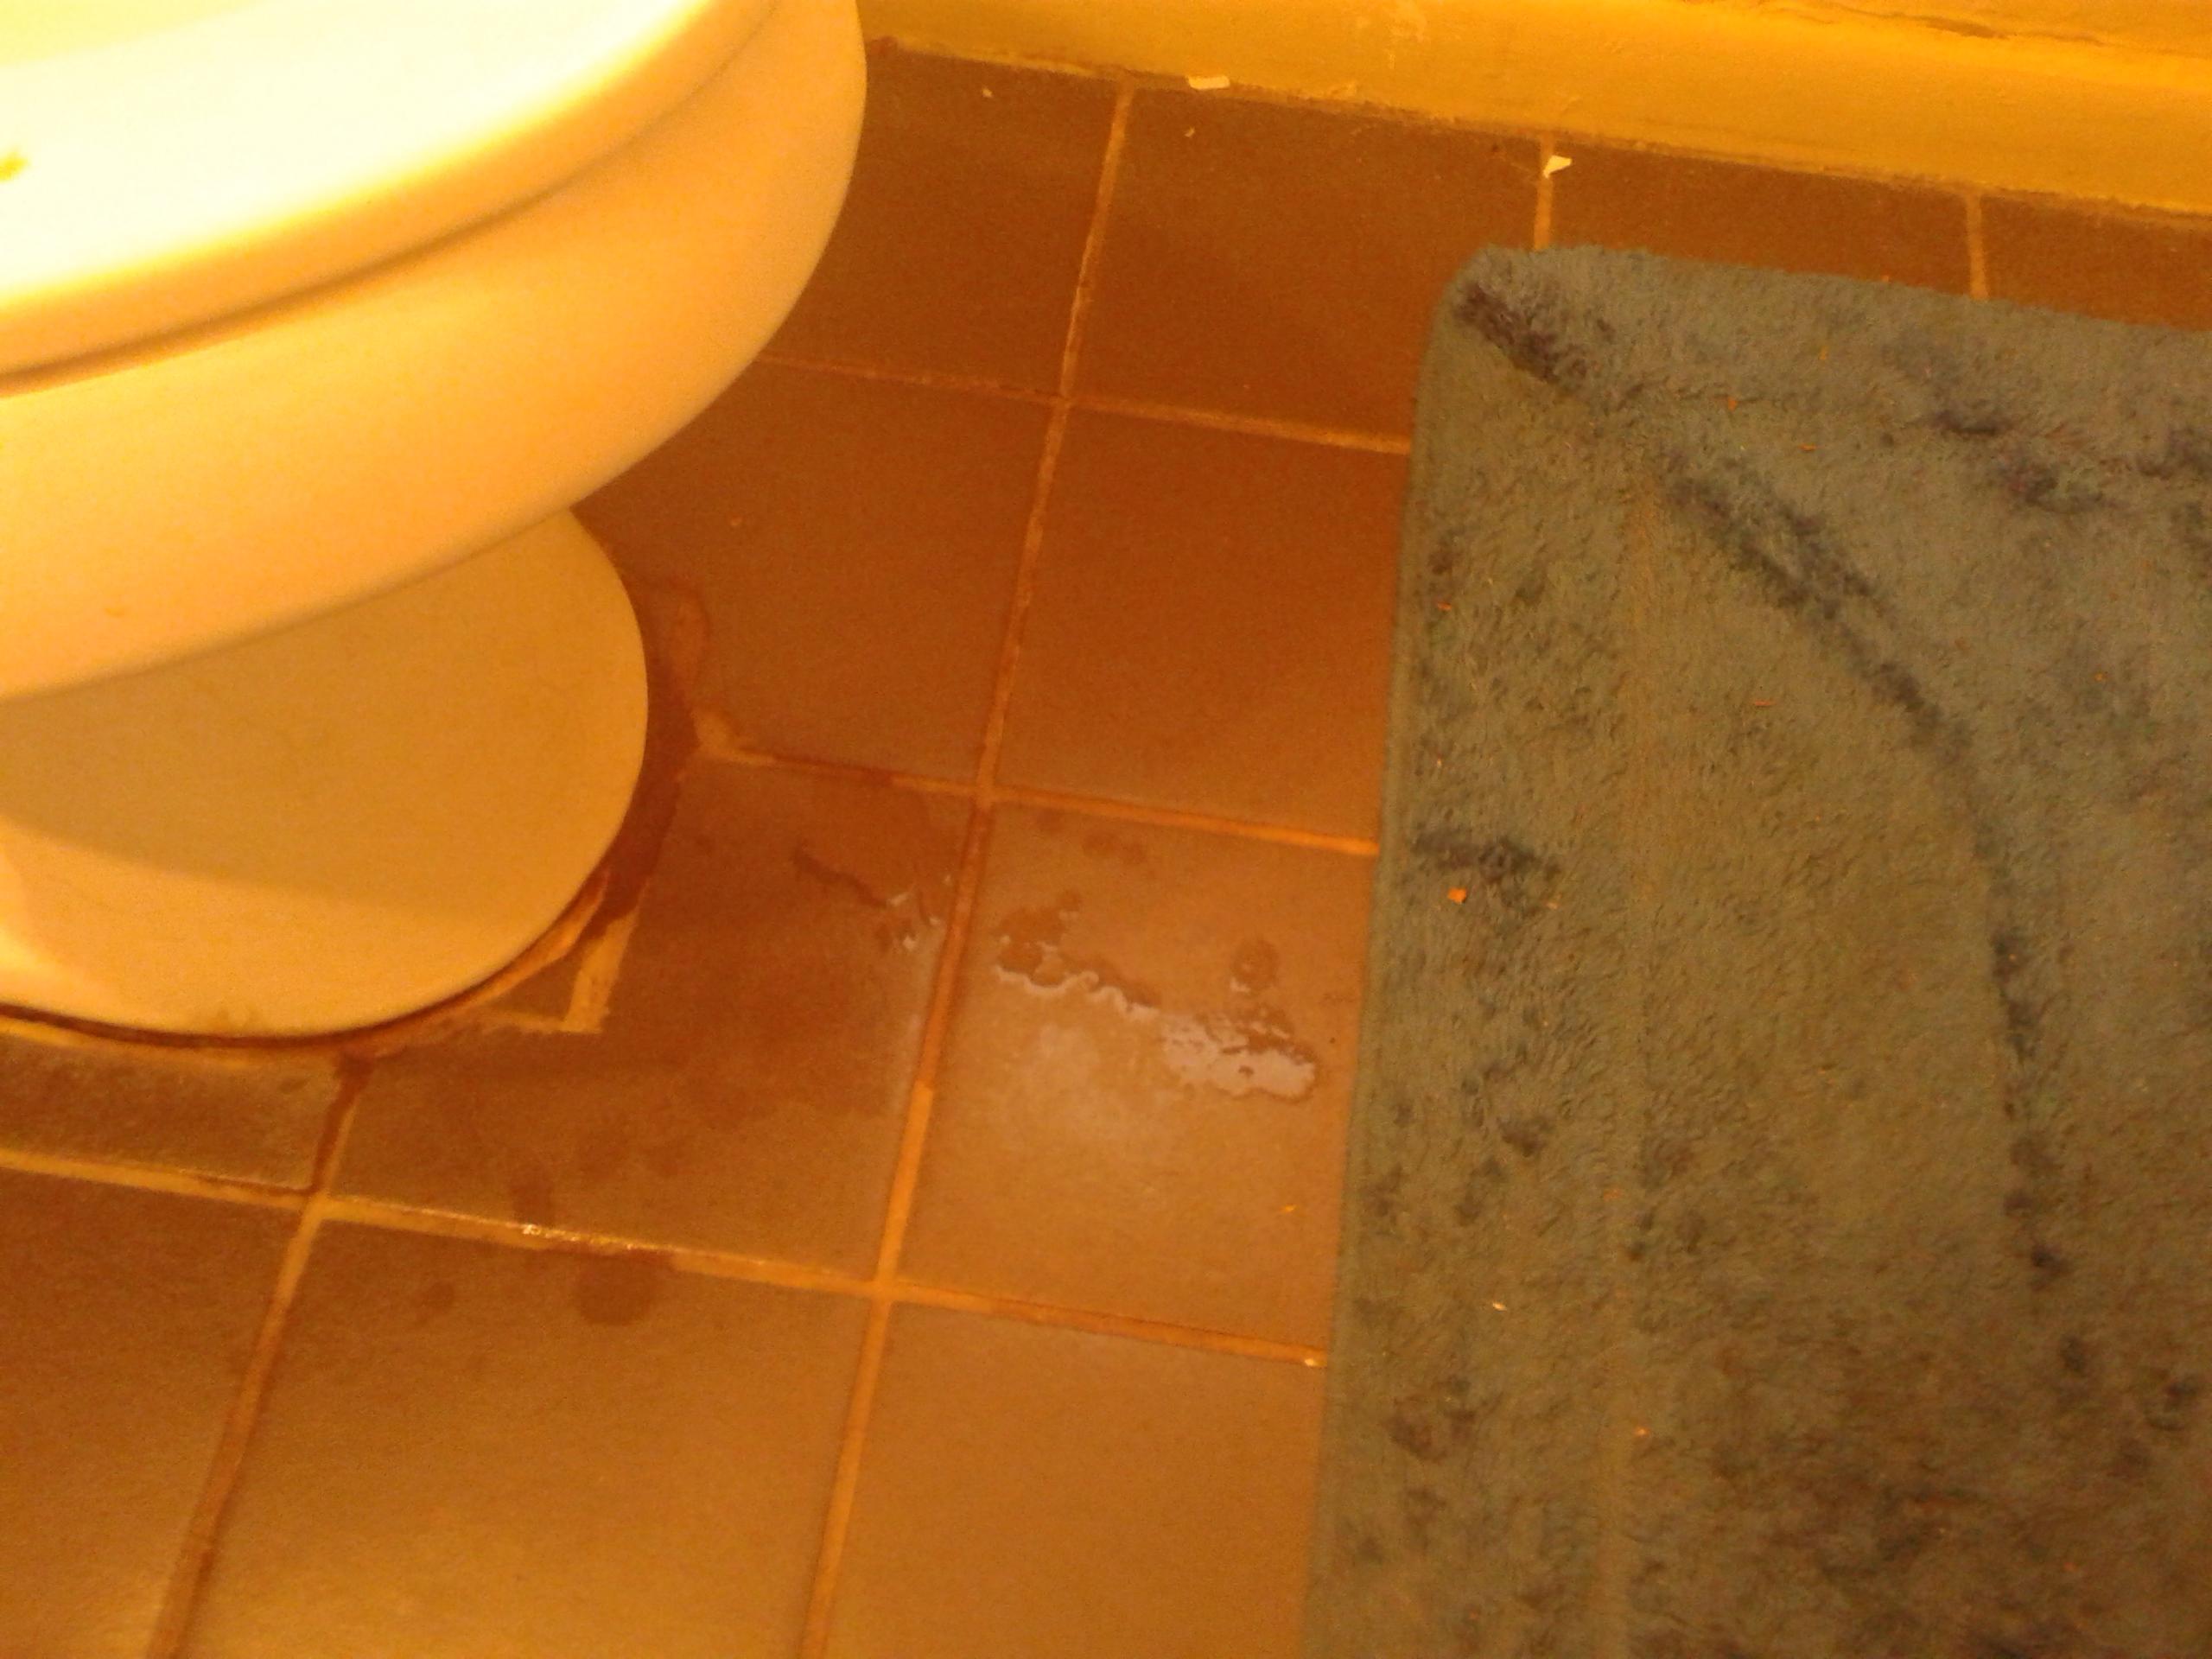 Retrograde reccomend Flushing sperm down the toilet